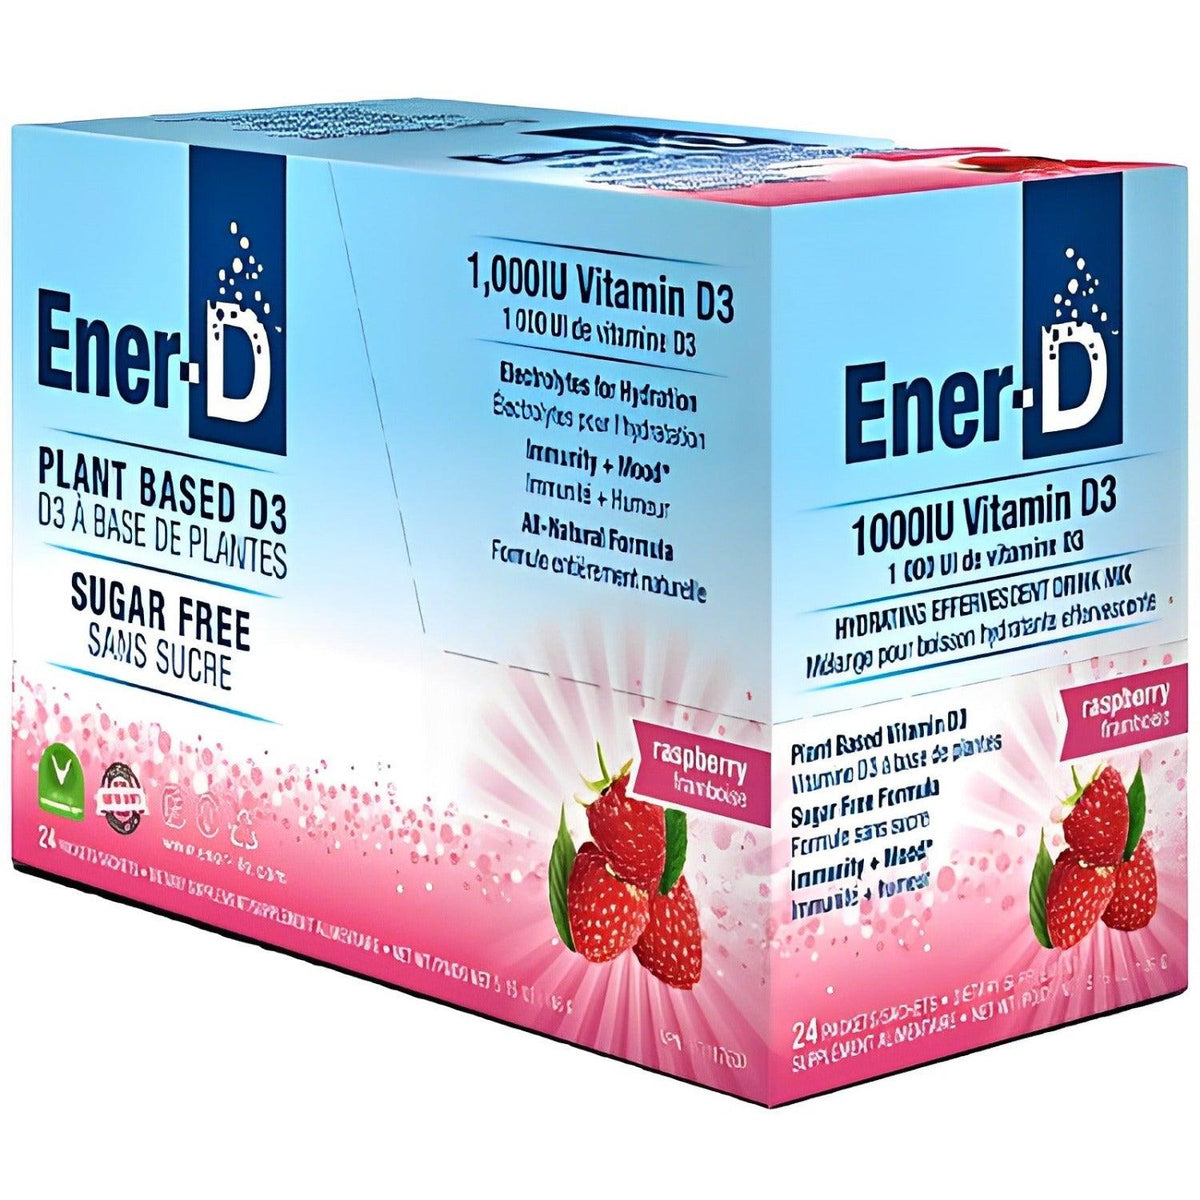 Ener-Life Vitamin D3 1000 IU Raspberry 24 Packs Vitamins - Vitamin D at Village Vitamin Store